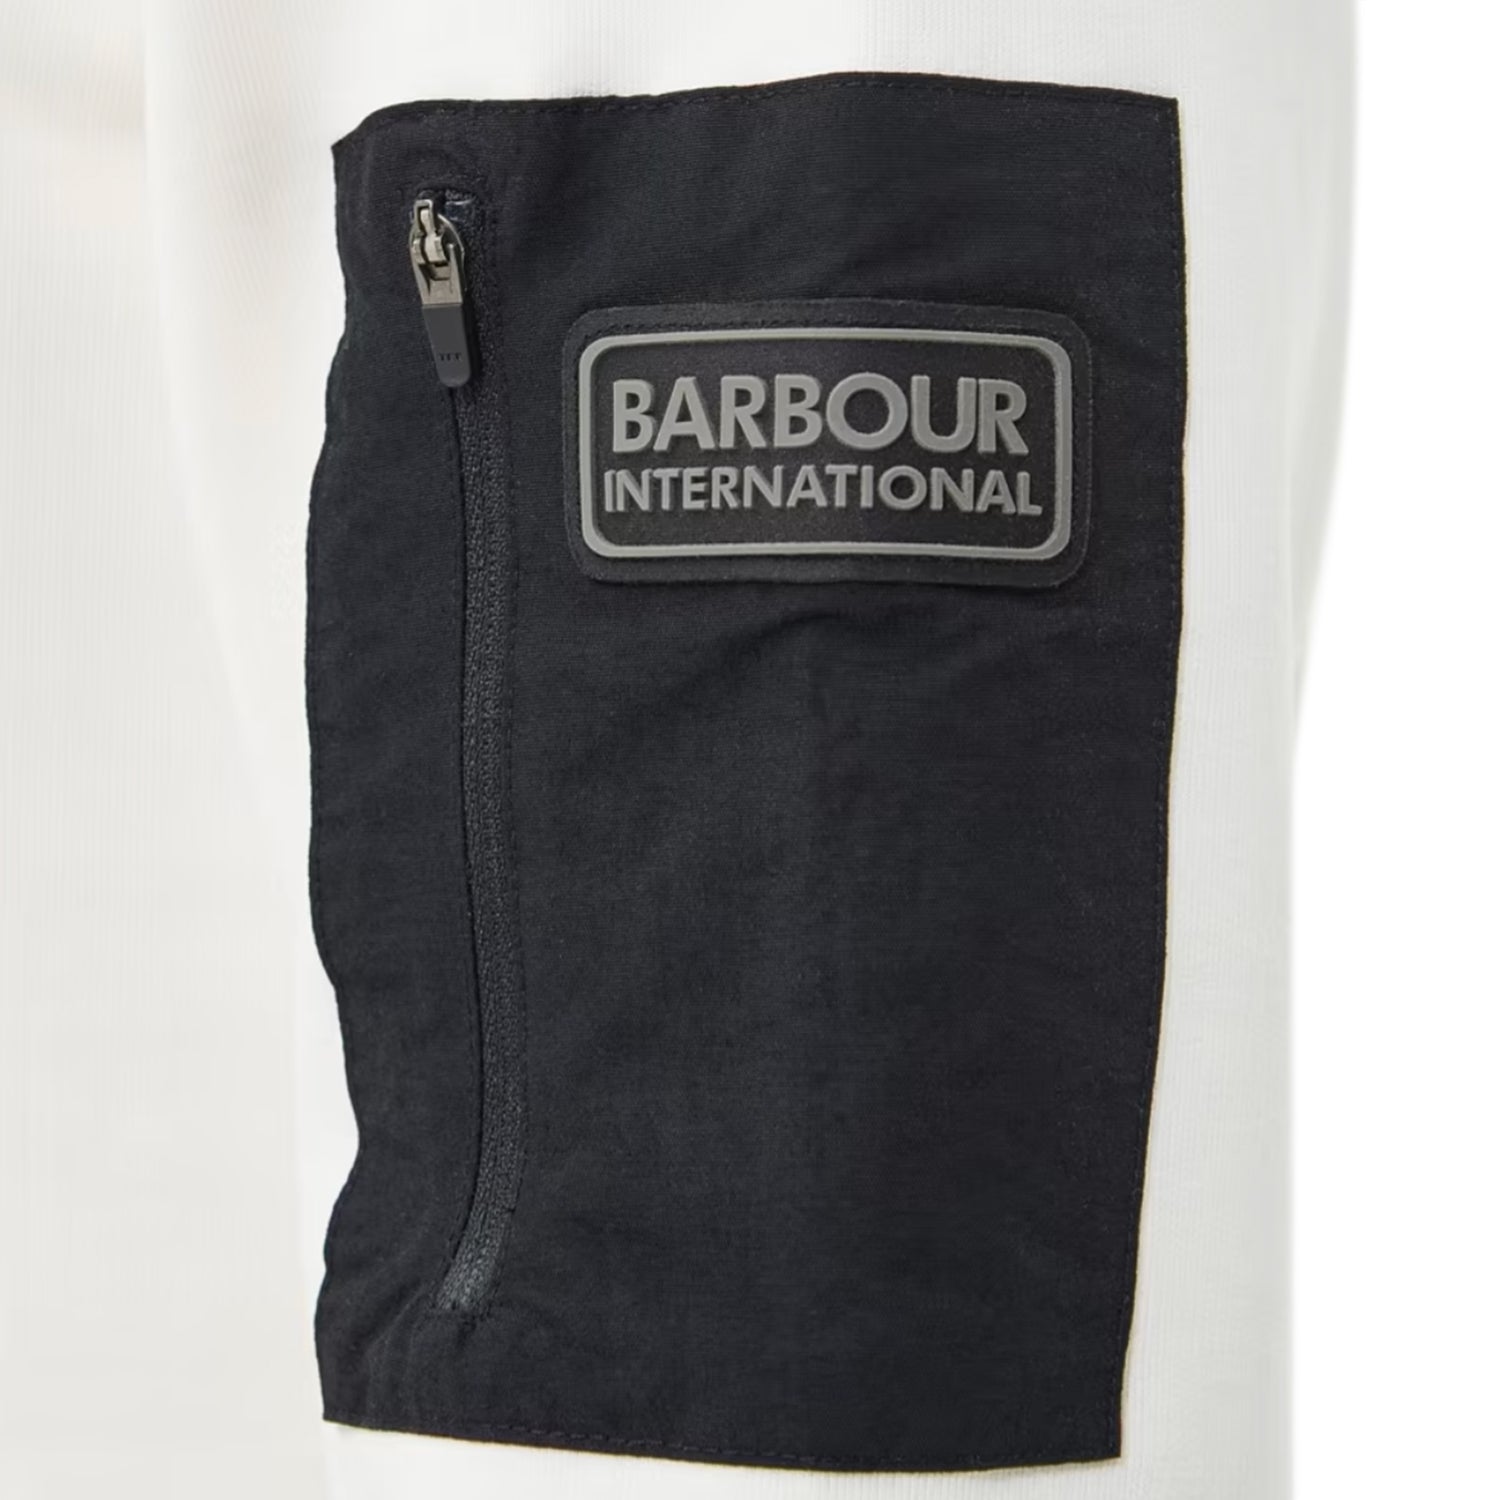 Barbour International Grip Crew Sweat - Whisper White